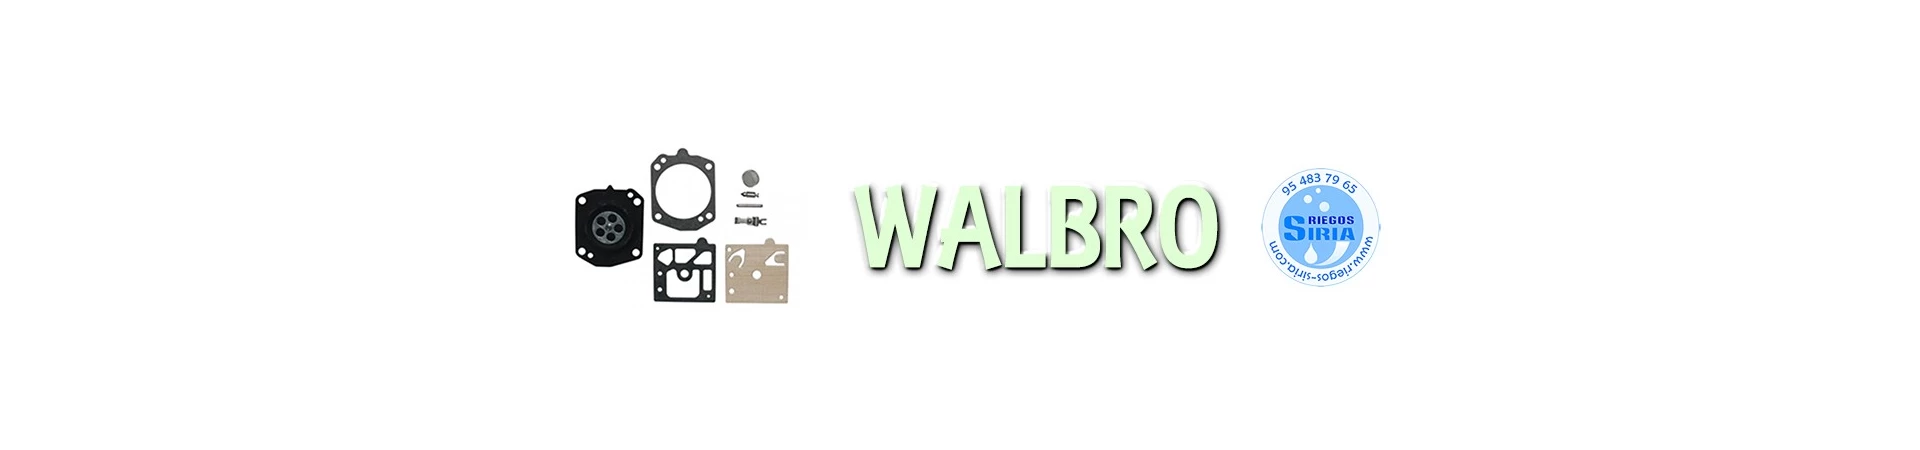 Kit Reparación Walbro